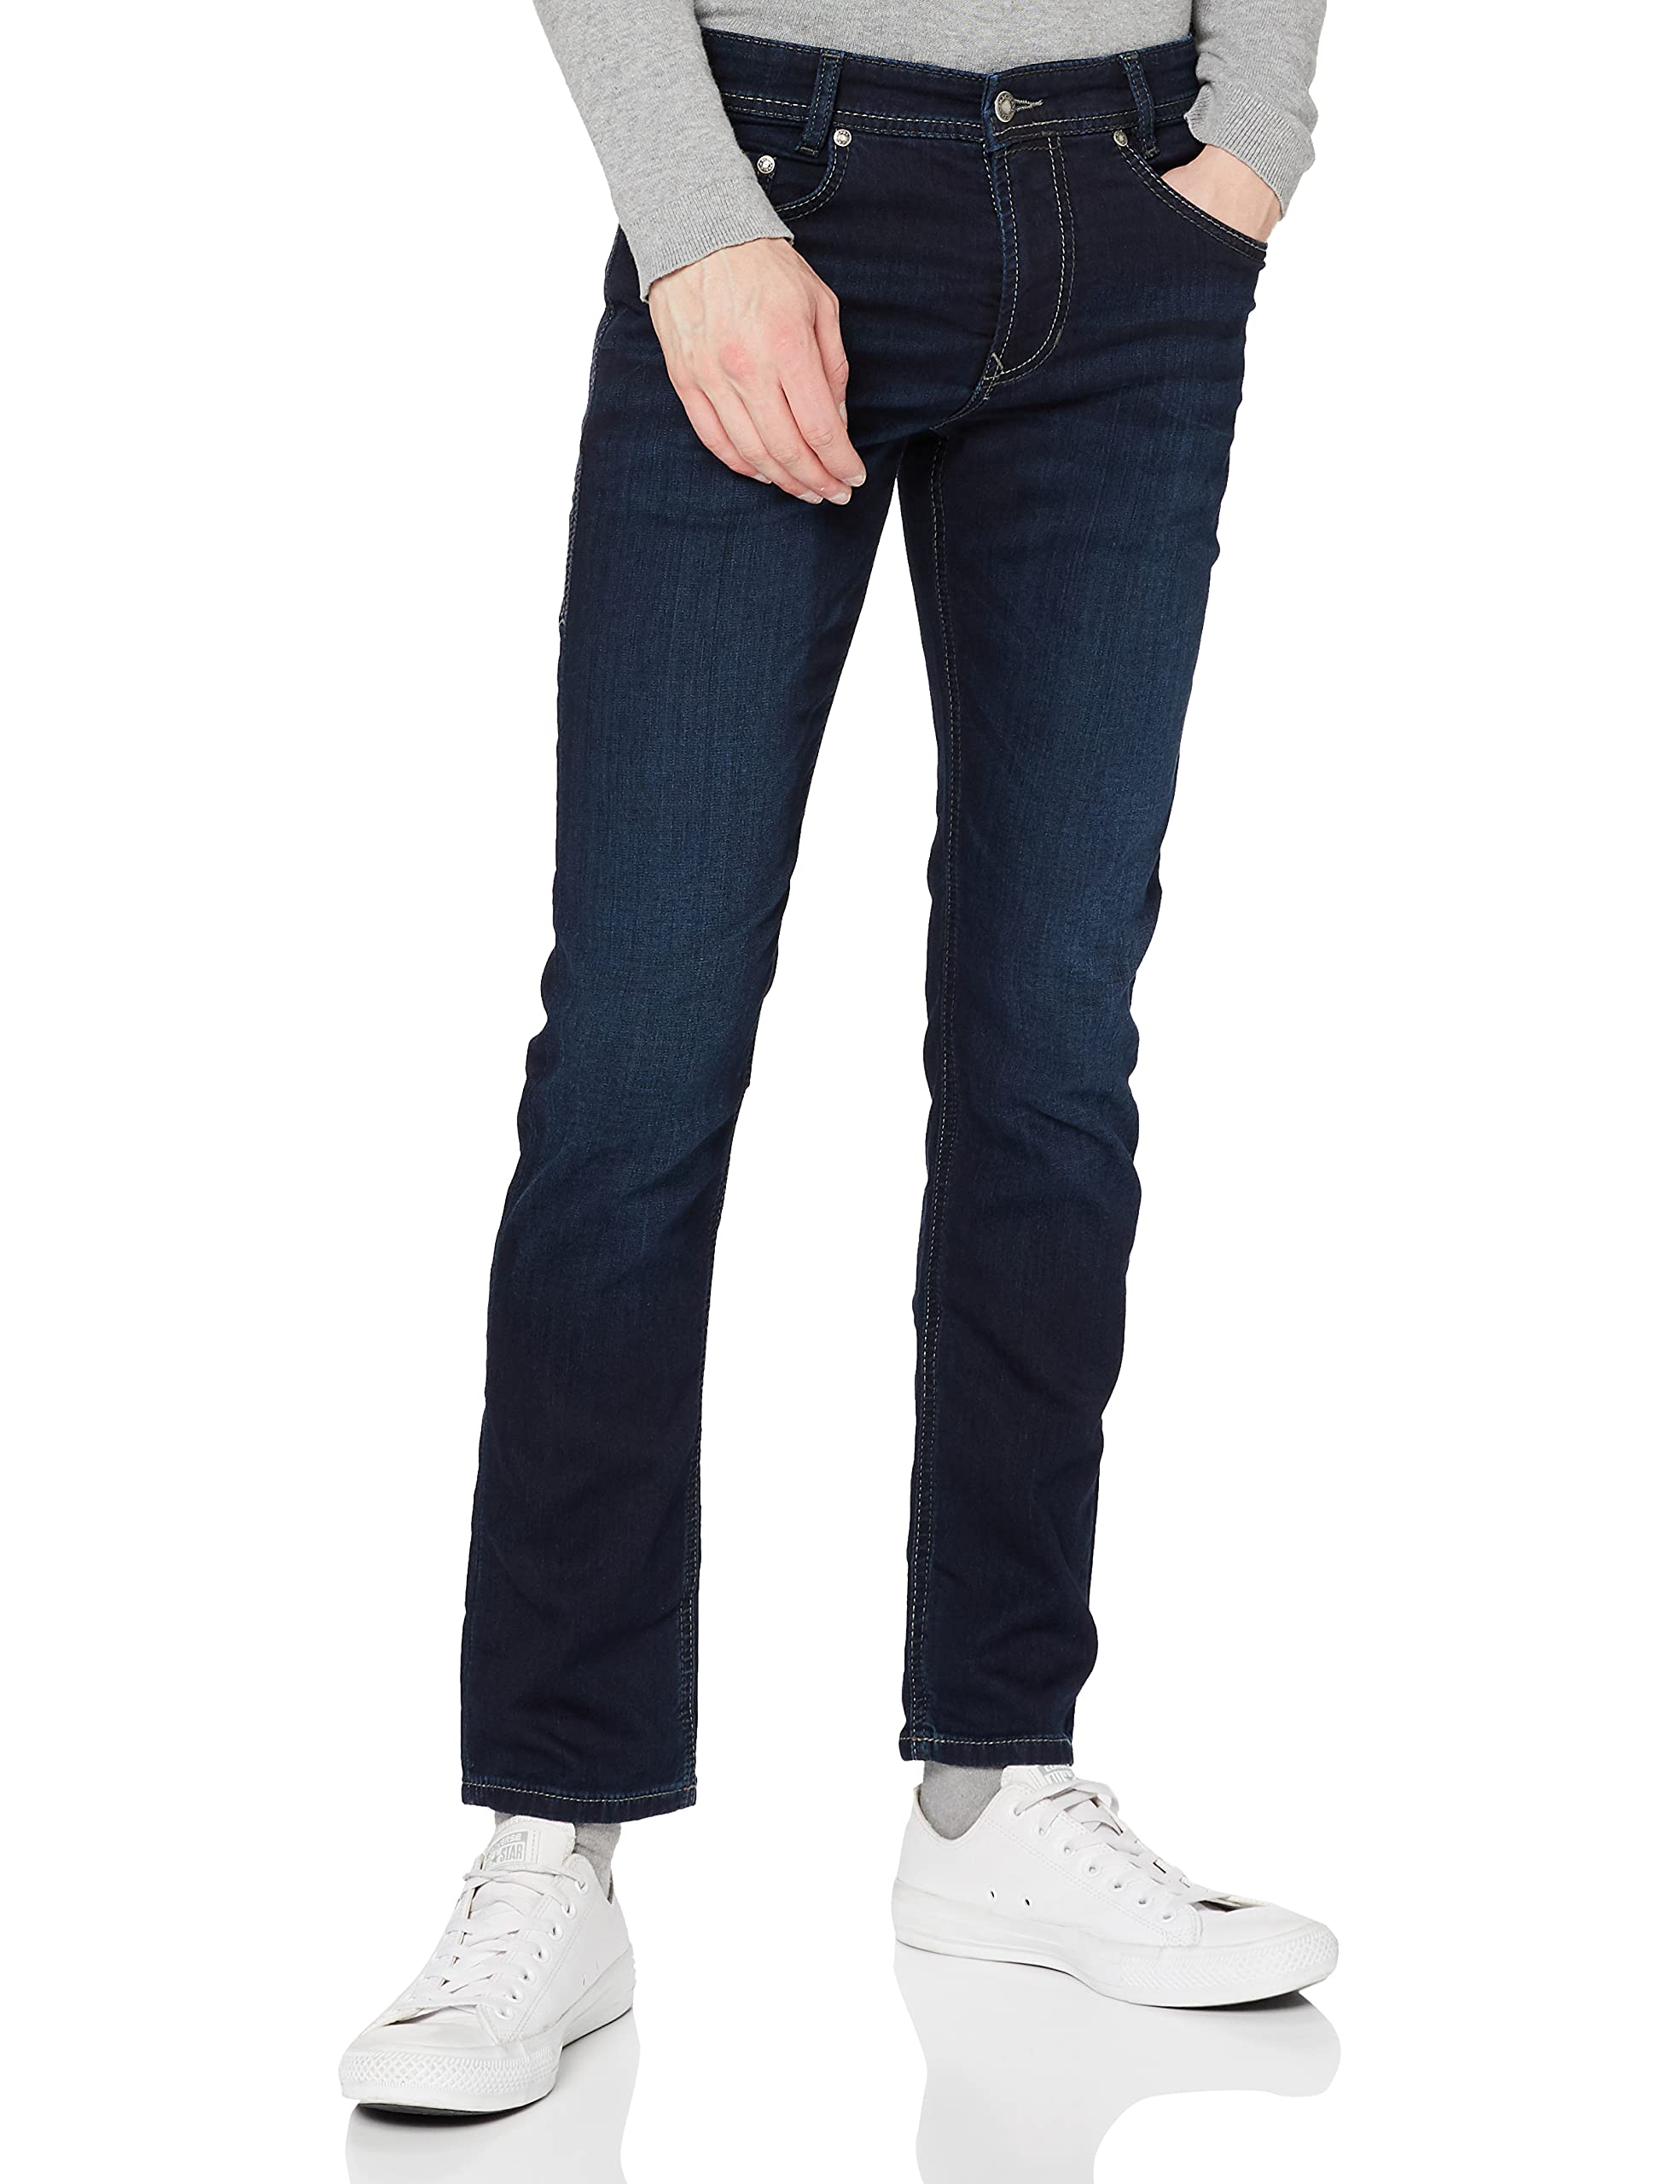 MAC Herren Straight Leg Jeanshose Jog'n Jeans, Blau (Dark Blue Authentik used H743), W34/L34 (Herstellergröße: 34/34)